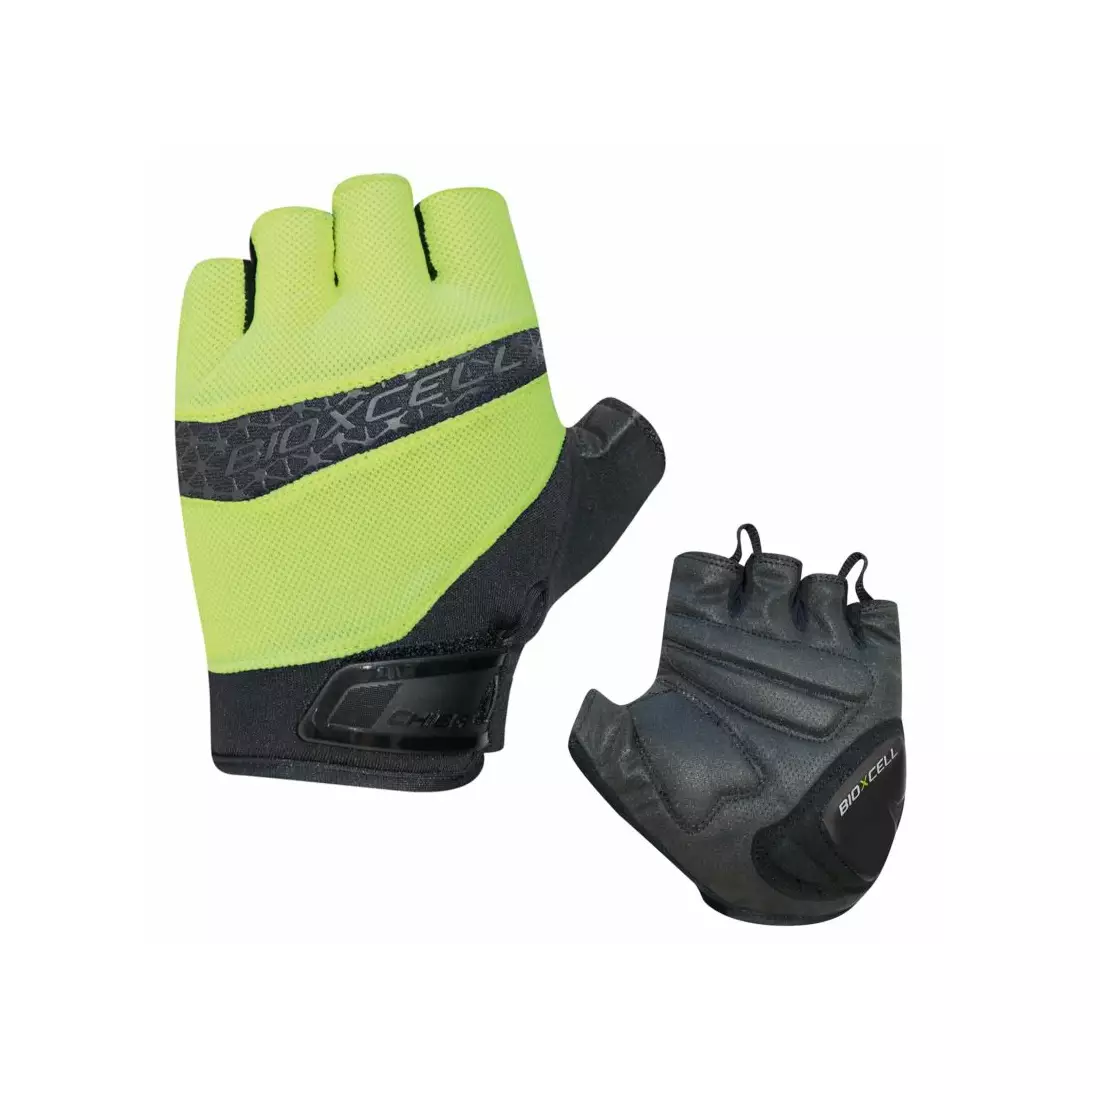 CHIBA BIOXCELL PRO cyklistické rukavice, černo-fluor